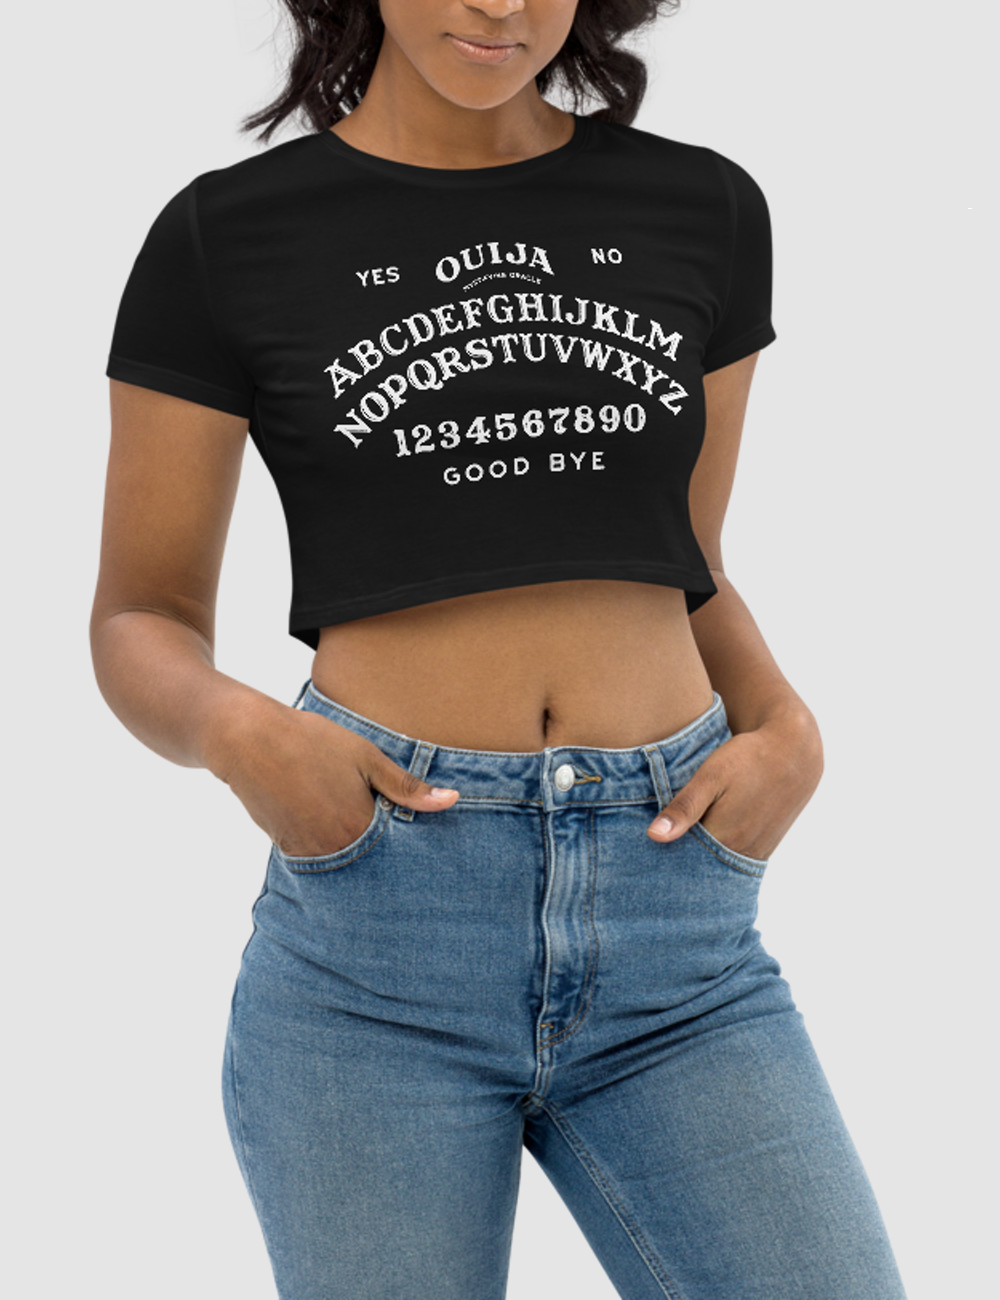 Ouija Board Women's Fitted Crop Top T-Shirt OniTakai